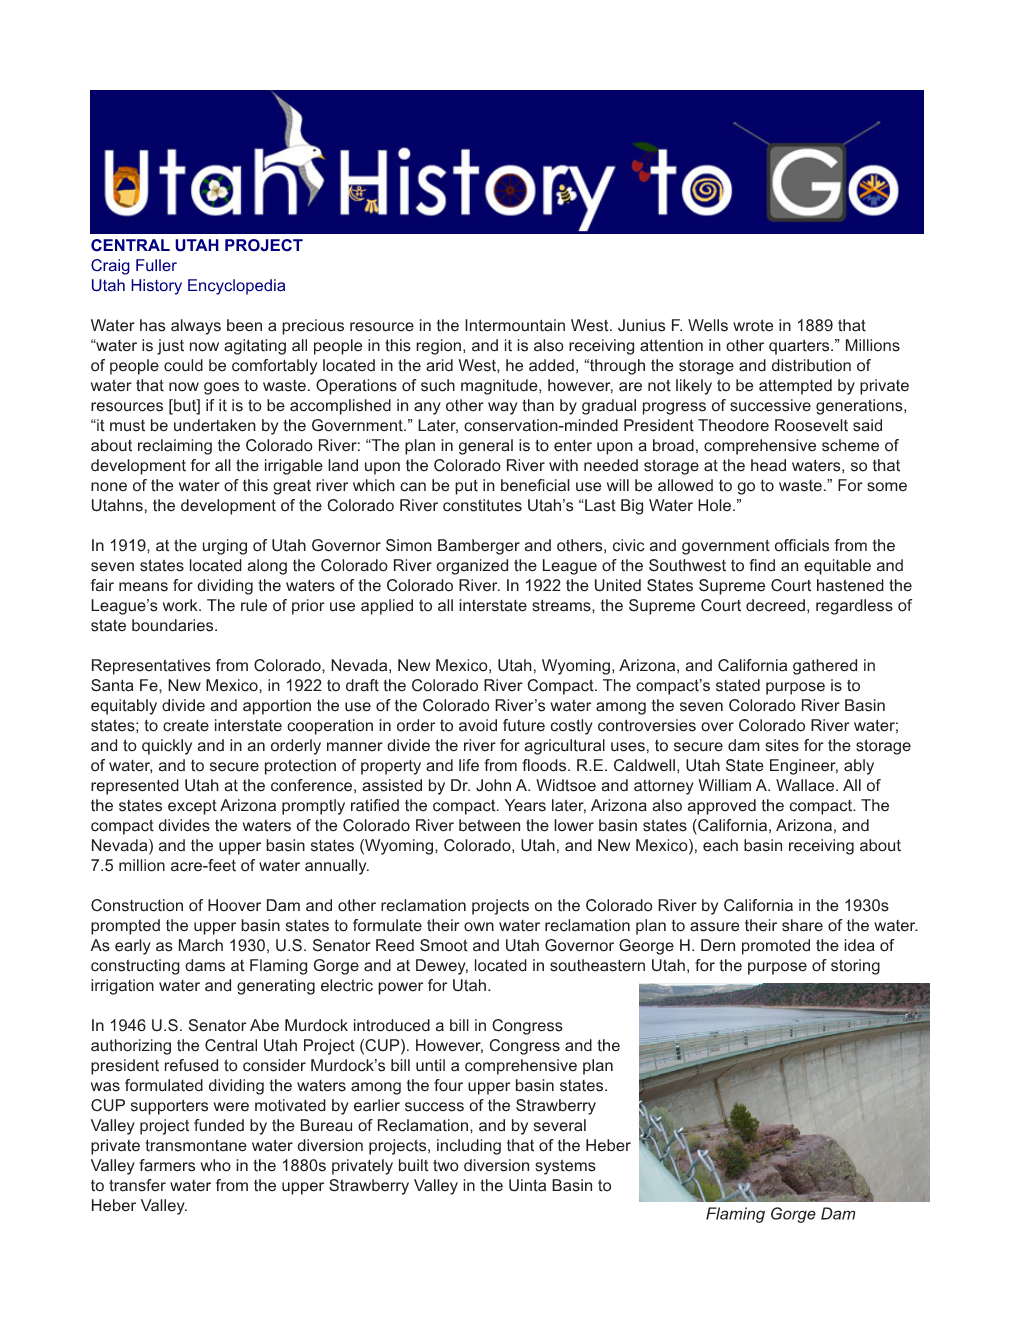 CENTRAL UTAH PROJECT Craig Fuller Utah History Encyclopedia